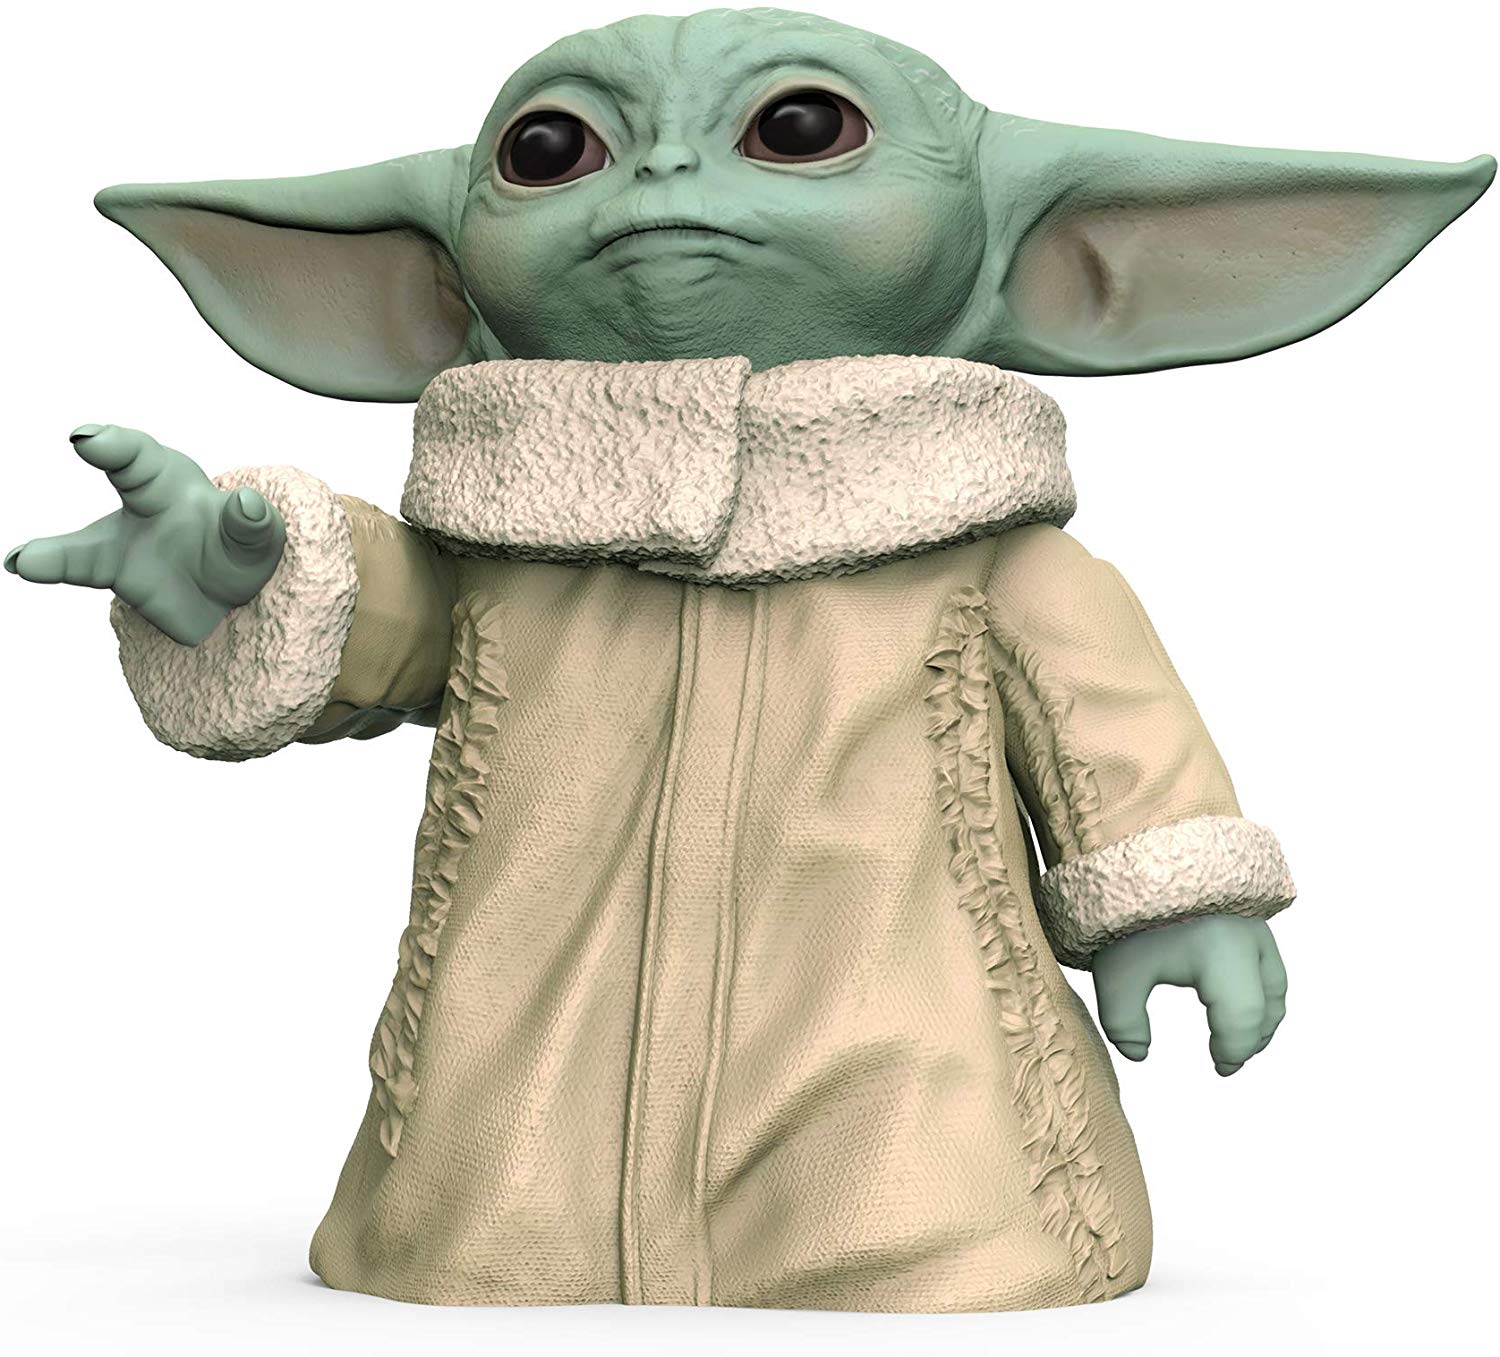 Figurine Star Wars The Mandalorian The Child - Baby Yoda 16cm